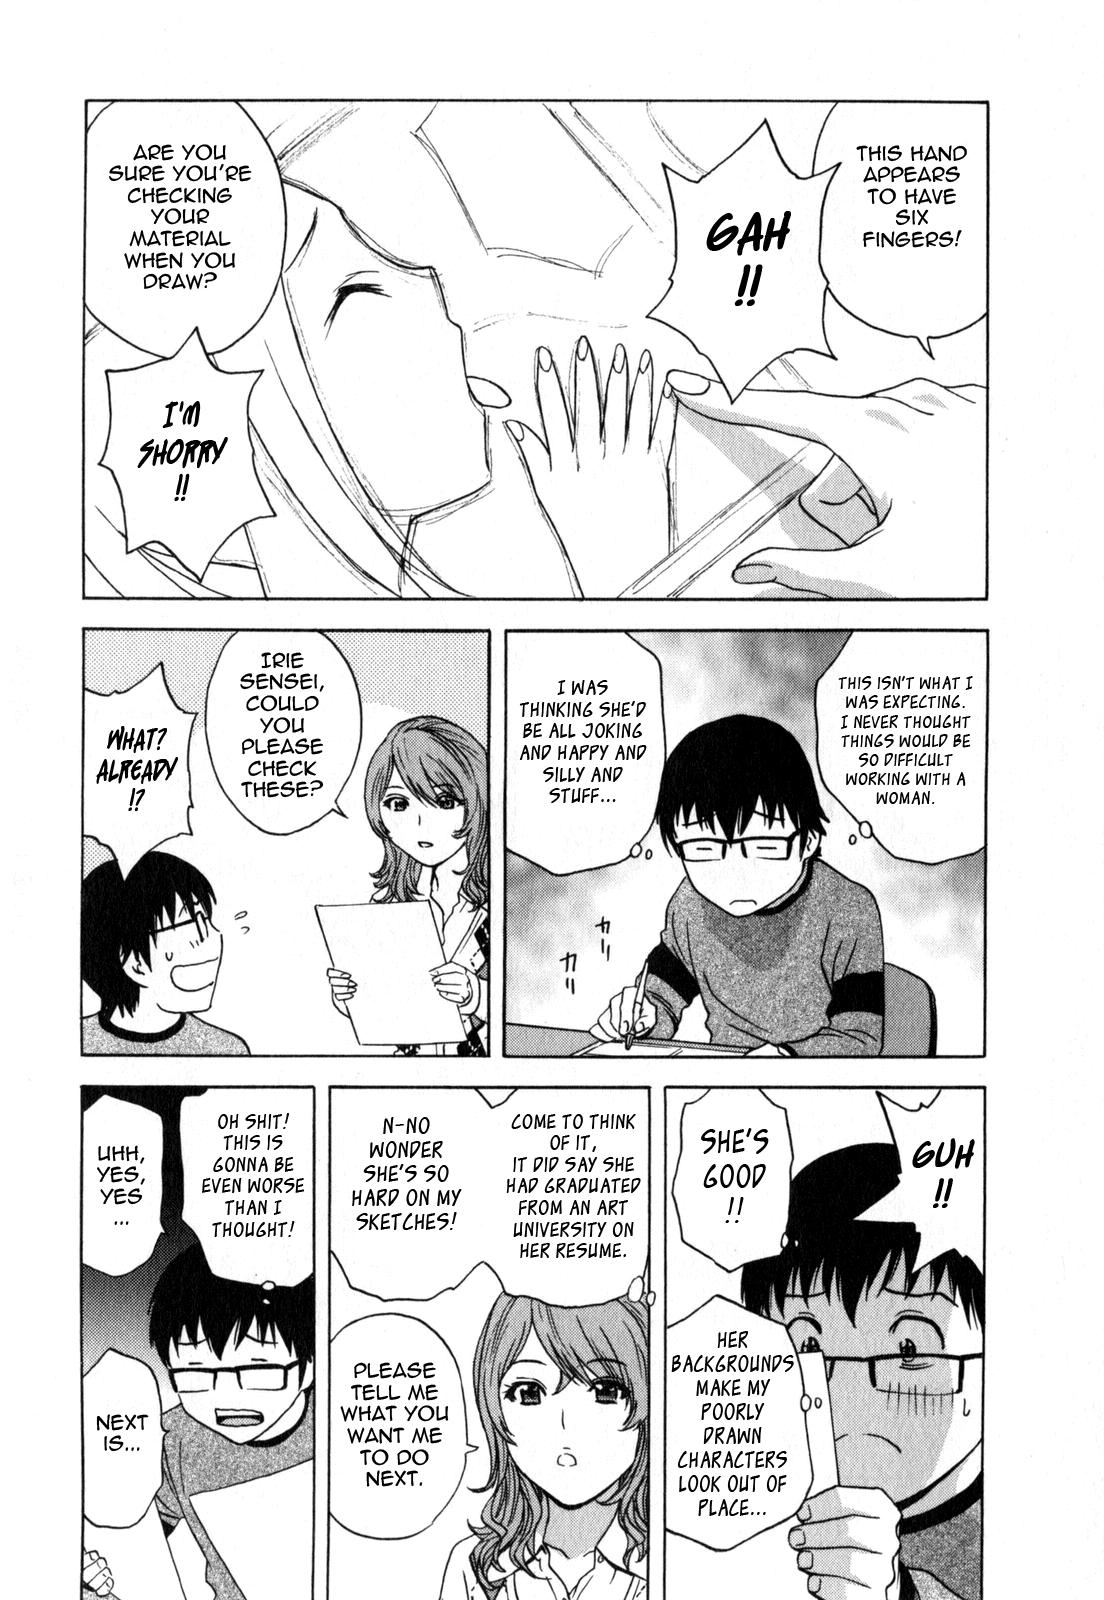 [Hidemaru] Life with Married Women Just Like a Manga 2 - Ch. 1-3 [English] {Tadanohito} 31